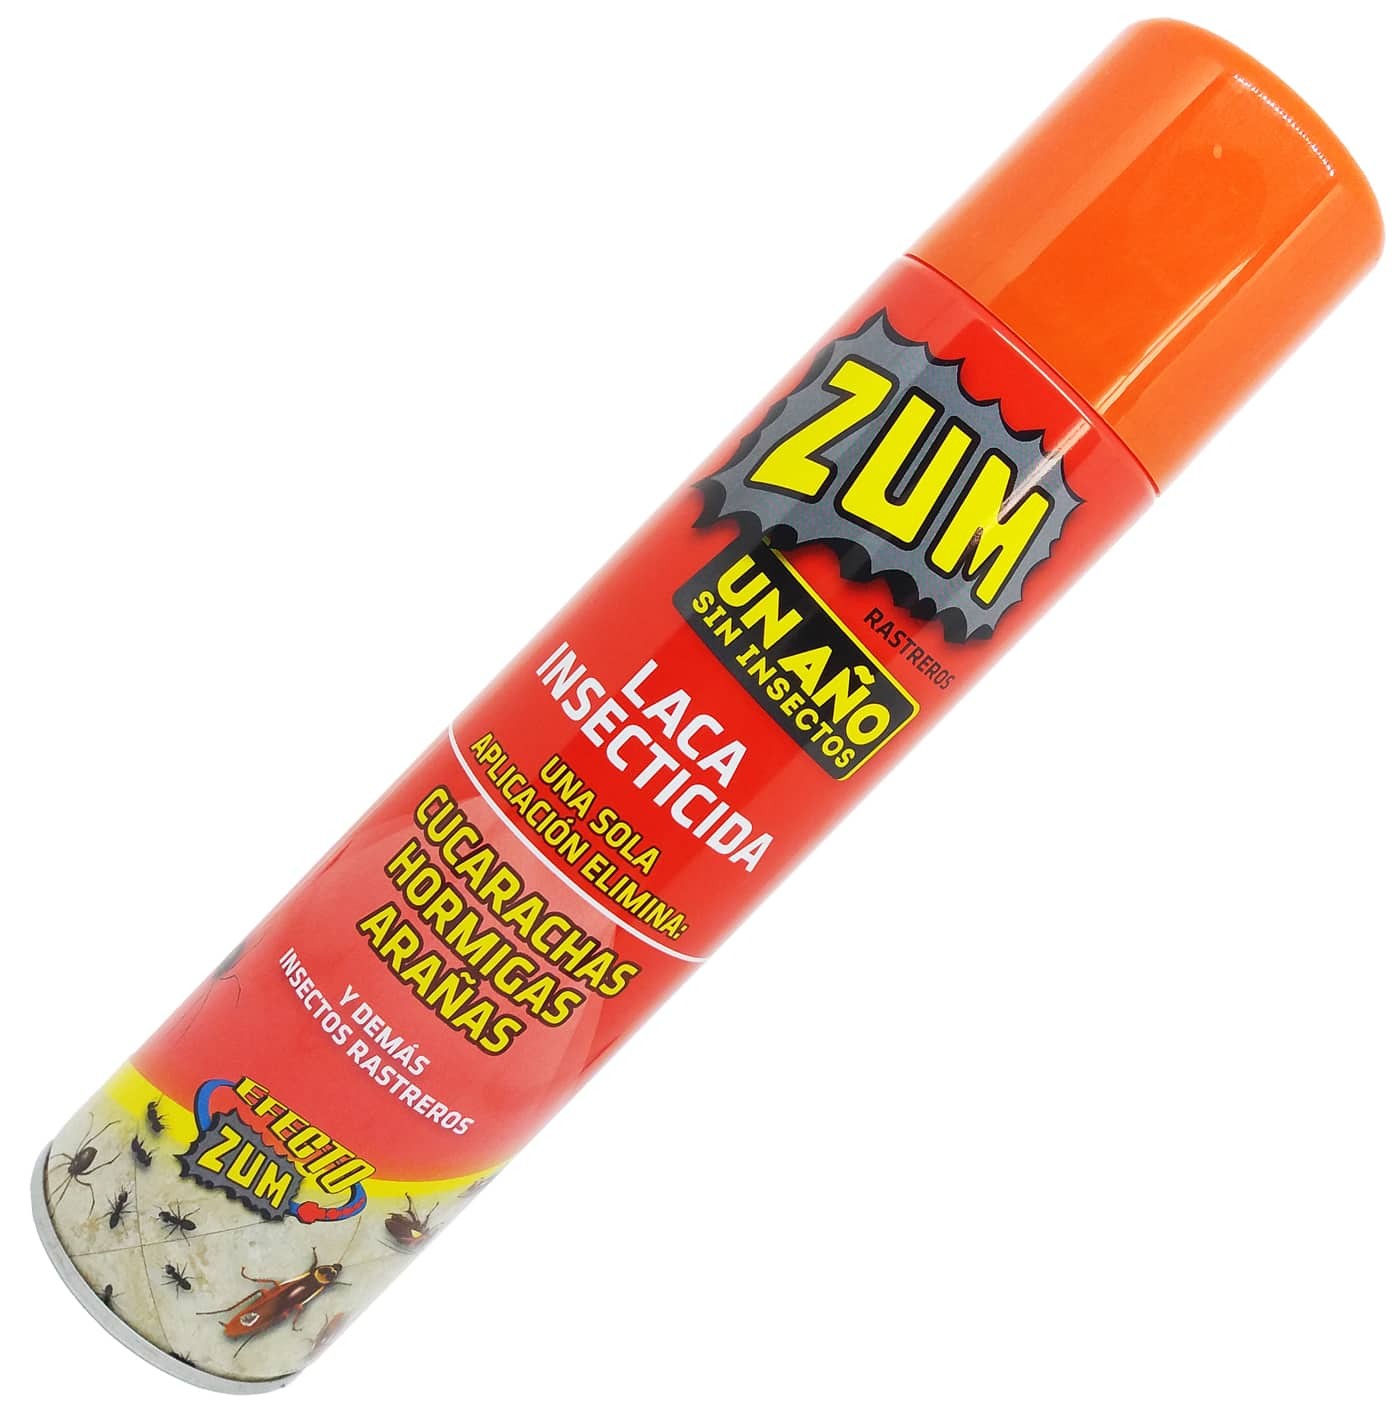 Laca spray Insecticida ZUM. Mata insectos rastreros como cucarachas, hormigas, arañas, chinches, etc. Efecto residual.